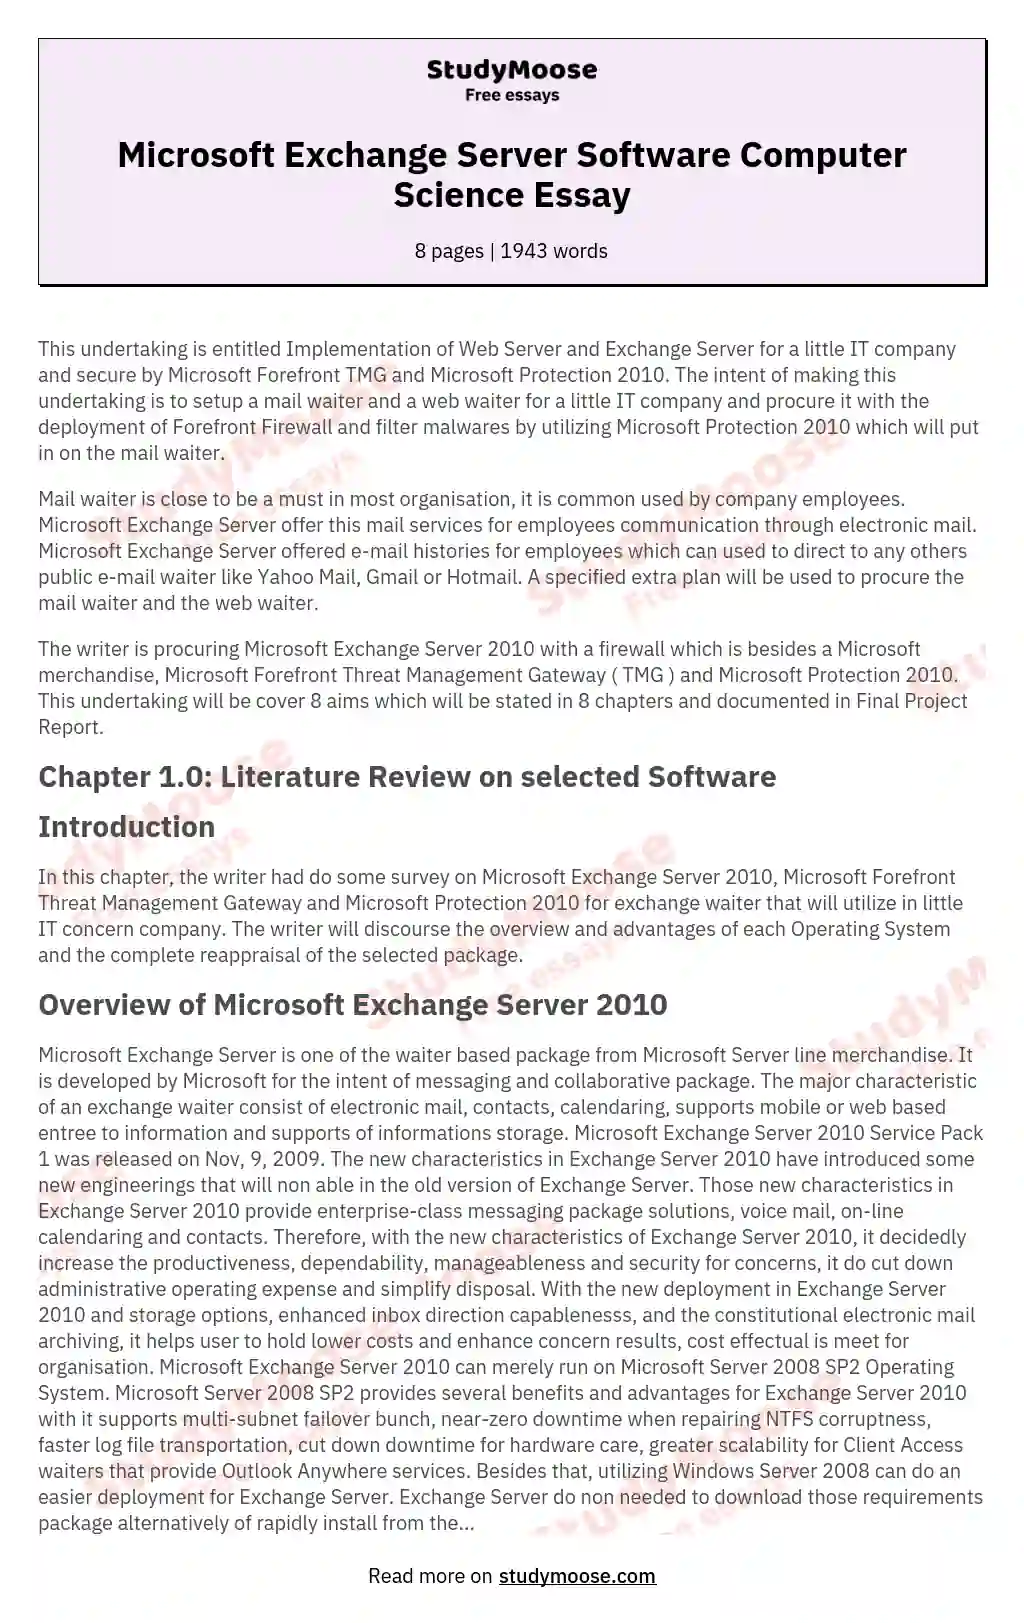 Microsoft Exchange Server Software Computer Science Essay